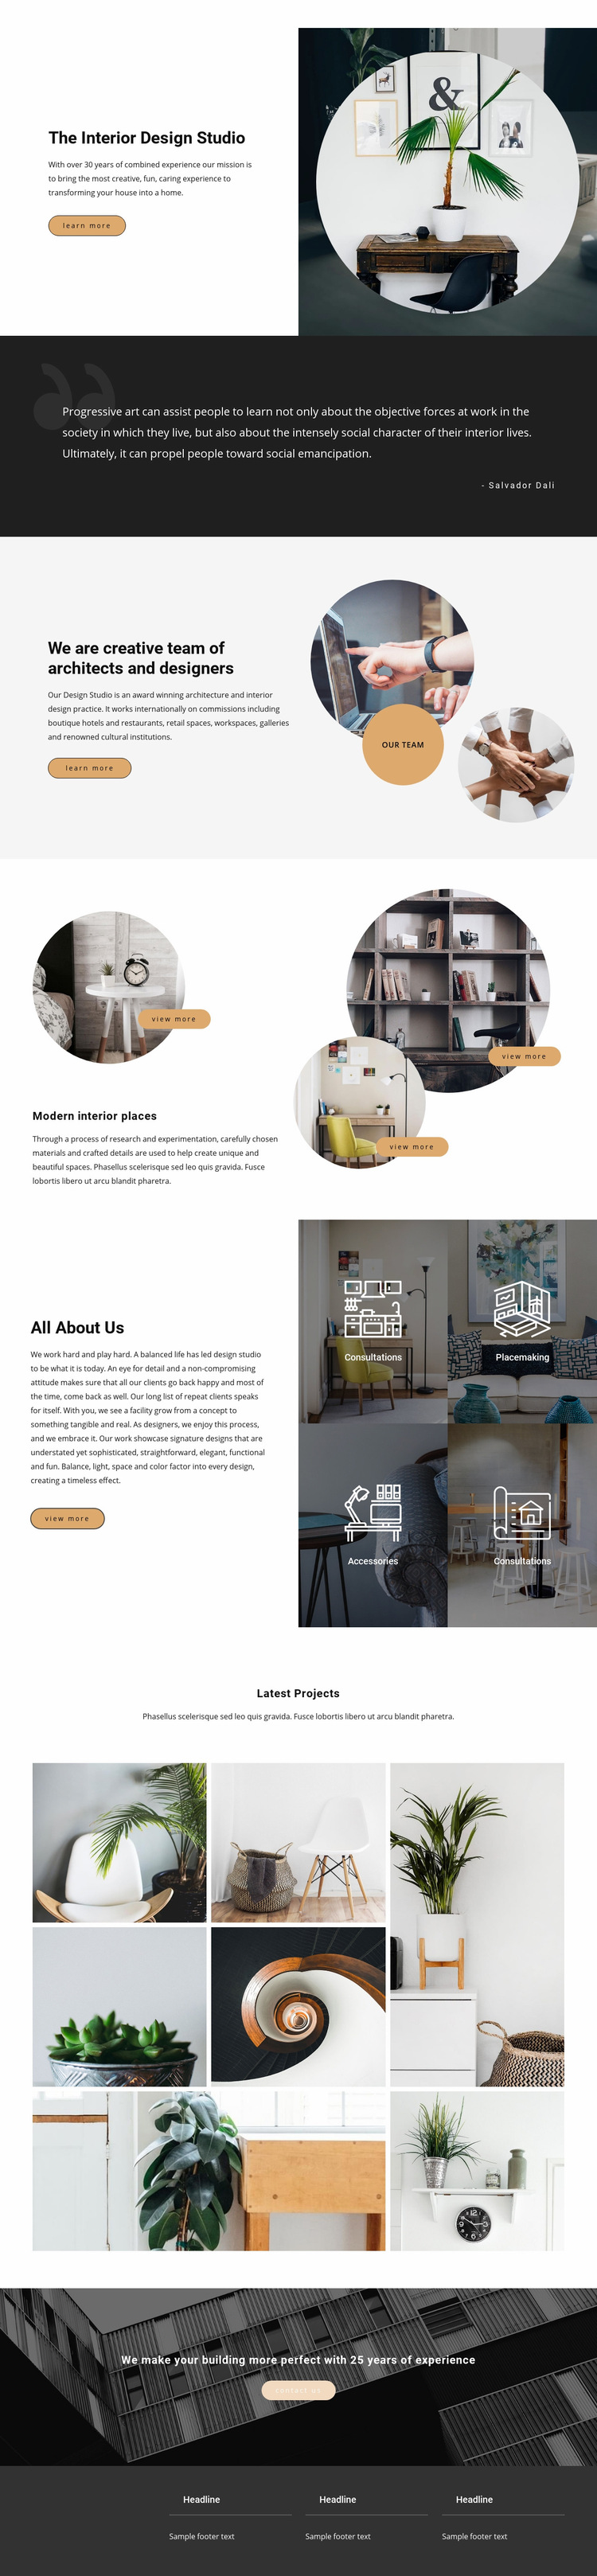 Interior innovations Web Page Design